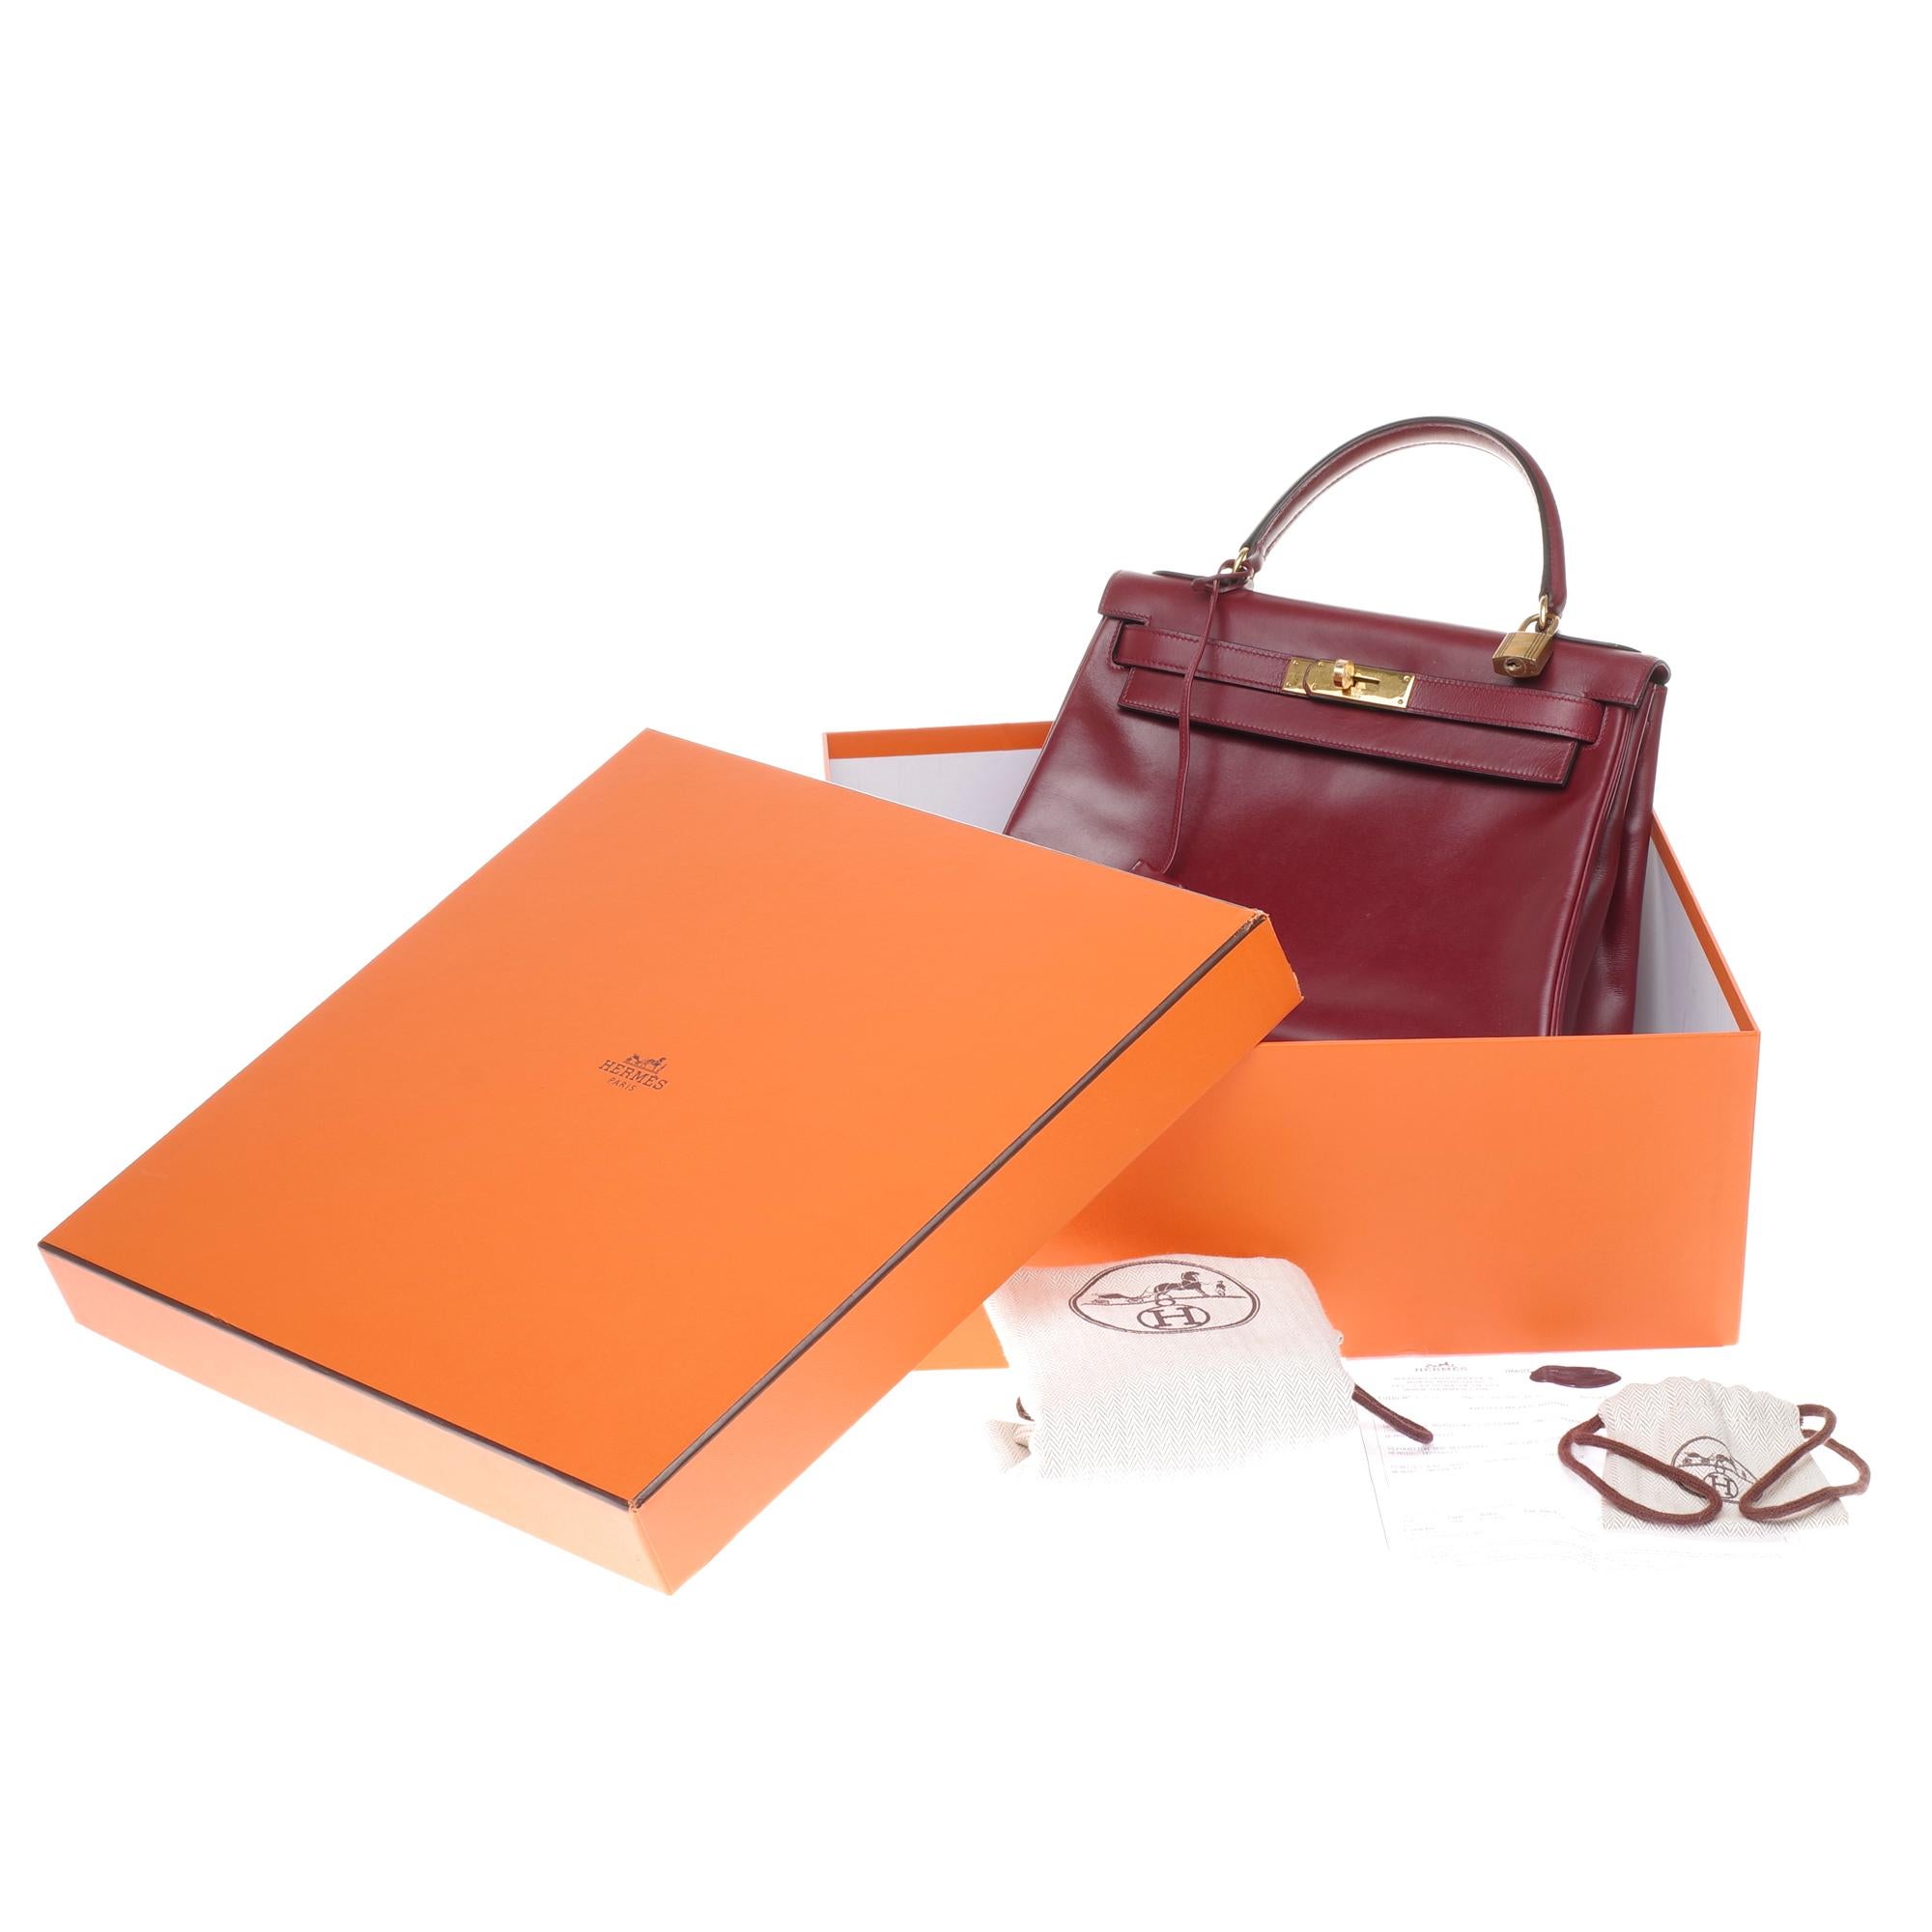 Hermès Kelly 28cm retourné handbag in burgundy box calfskin with Gold hardware 4